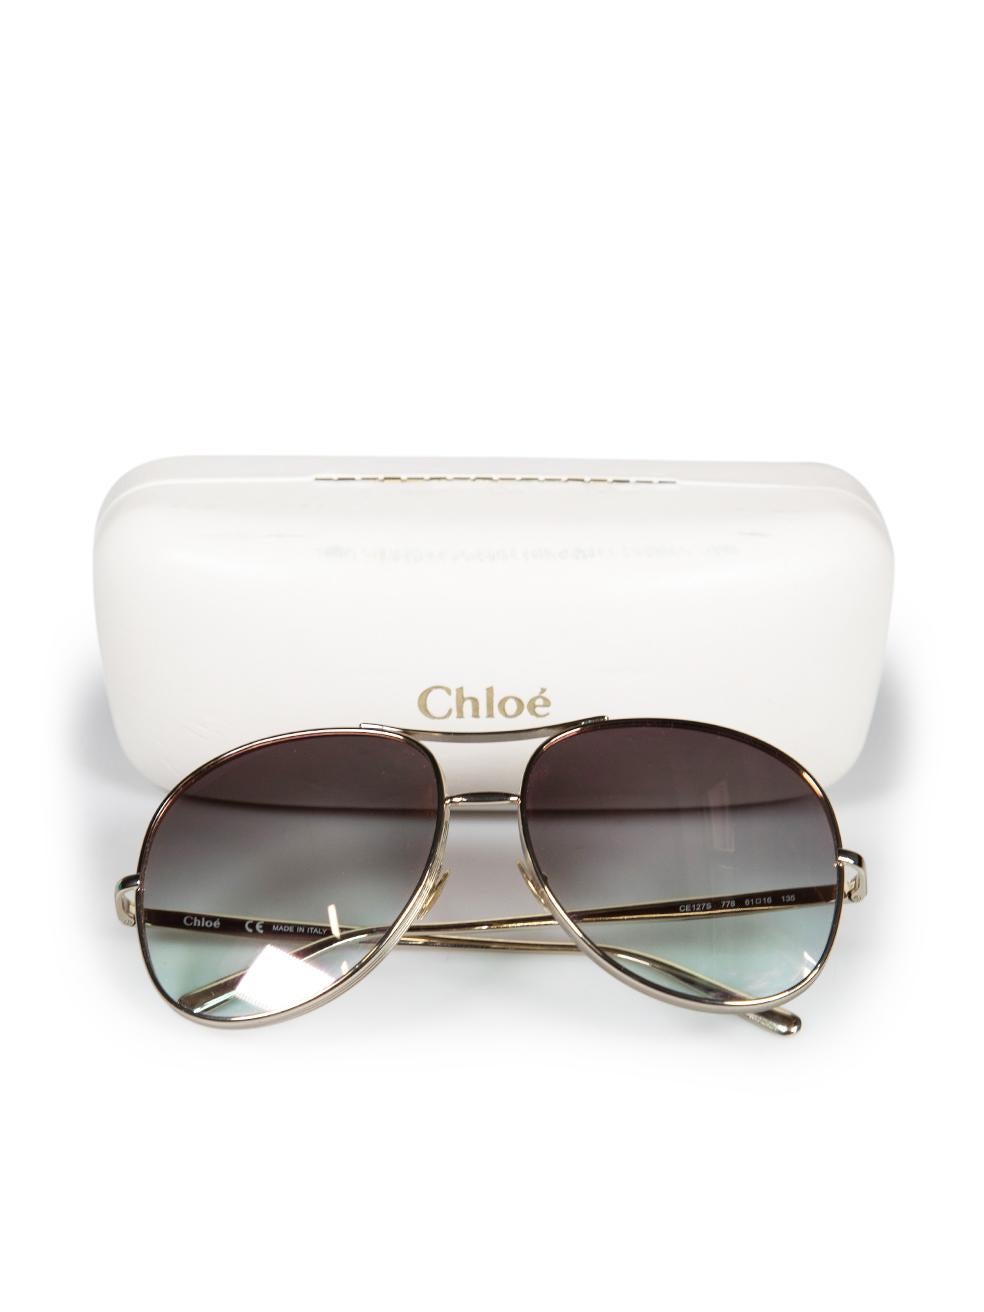 Chloé Silver Nola CE127S Aviator Sunglasses For Sale 3